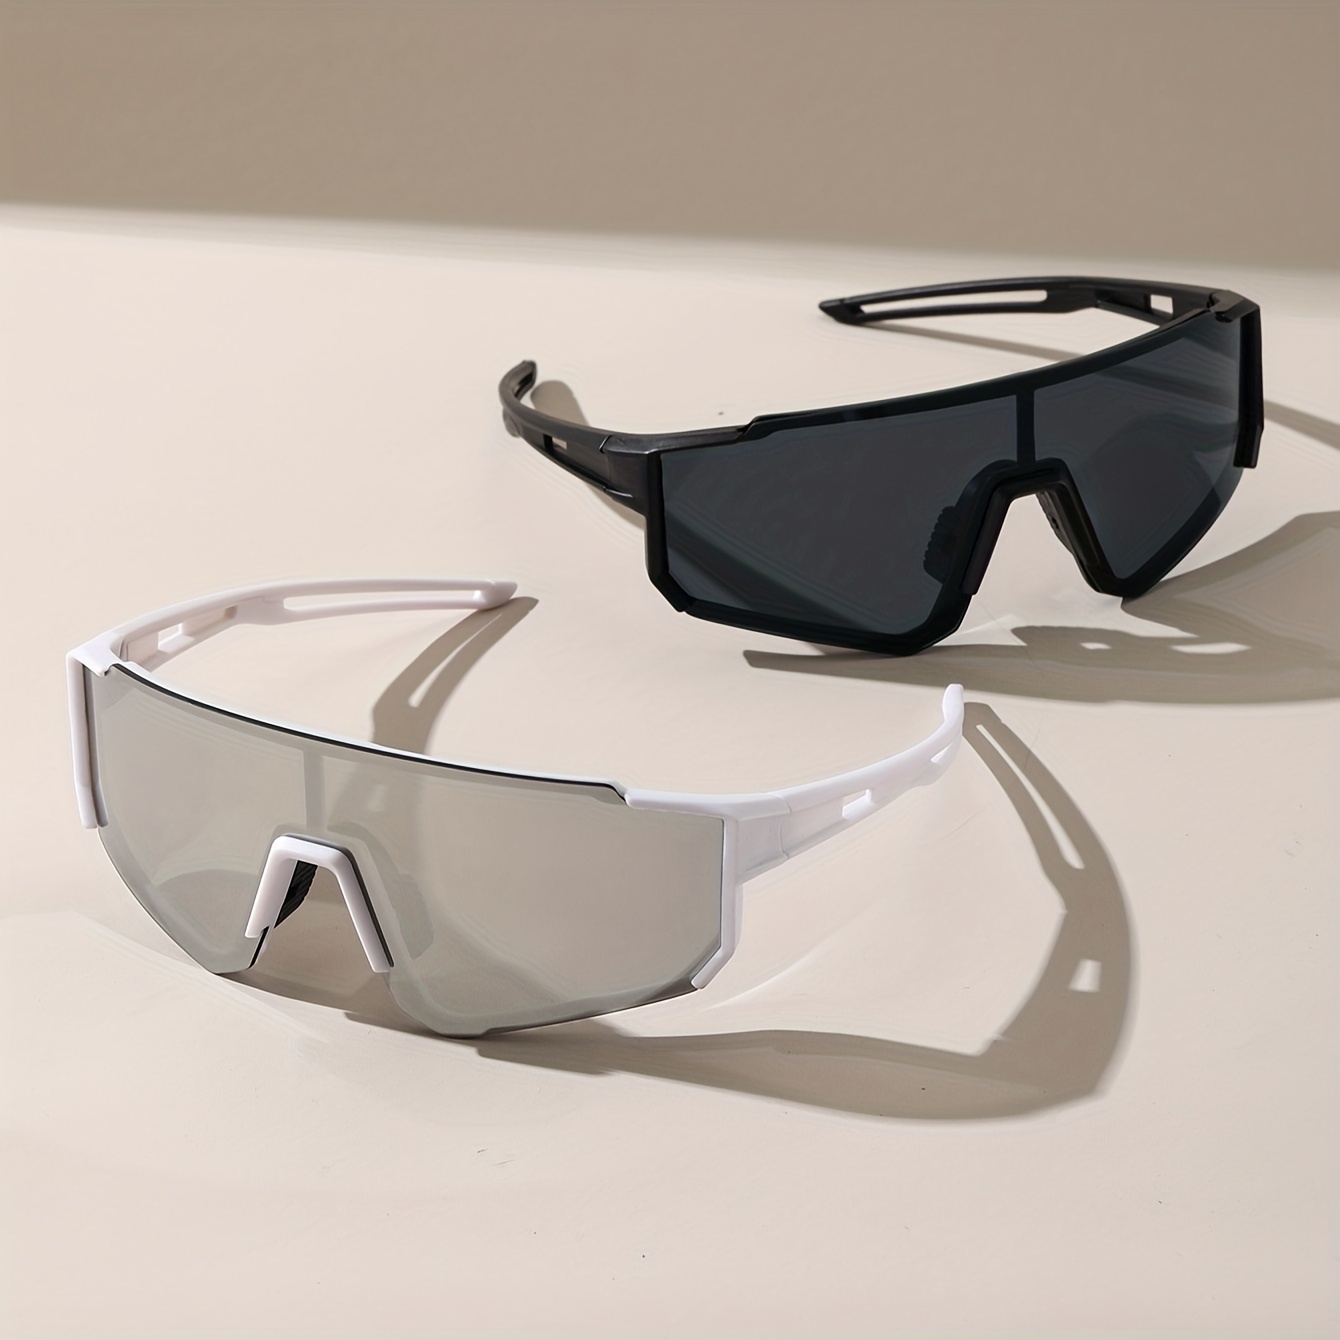 

2pcs Futuristic Fashion Glasses For Women Men Anti Glare Sun Shades Glasses For Driving Beach Travel